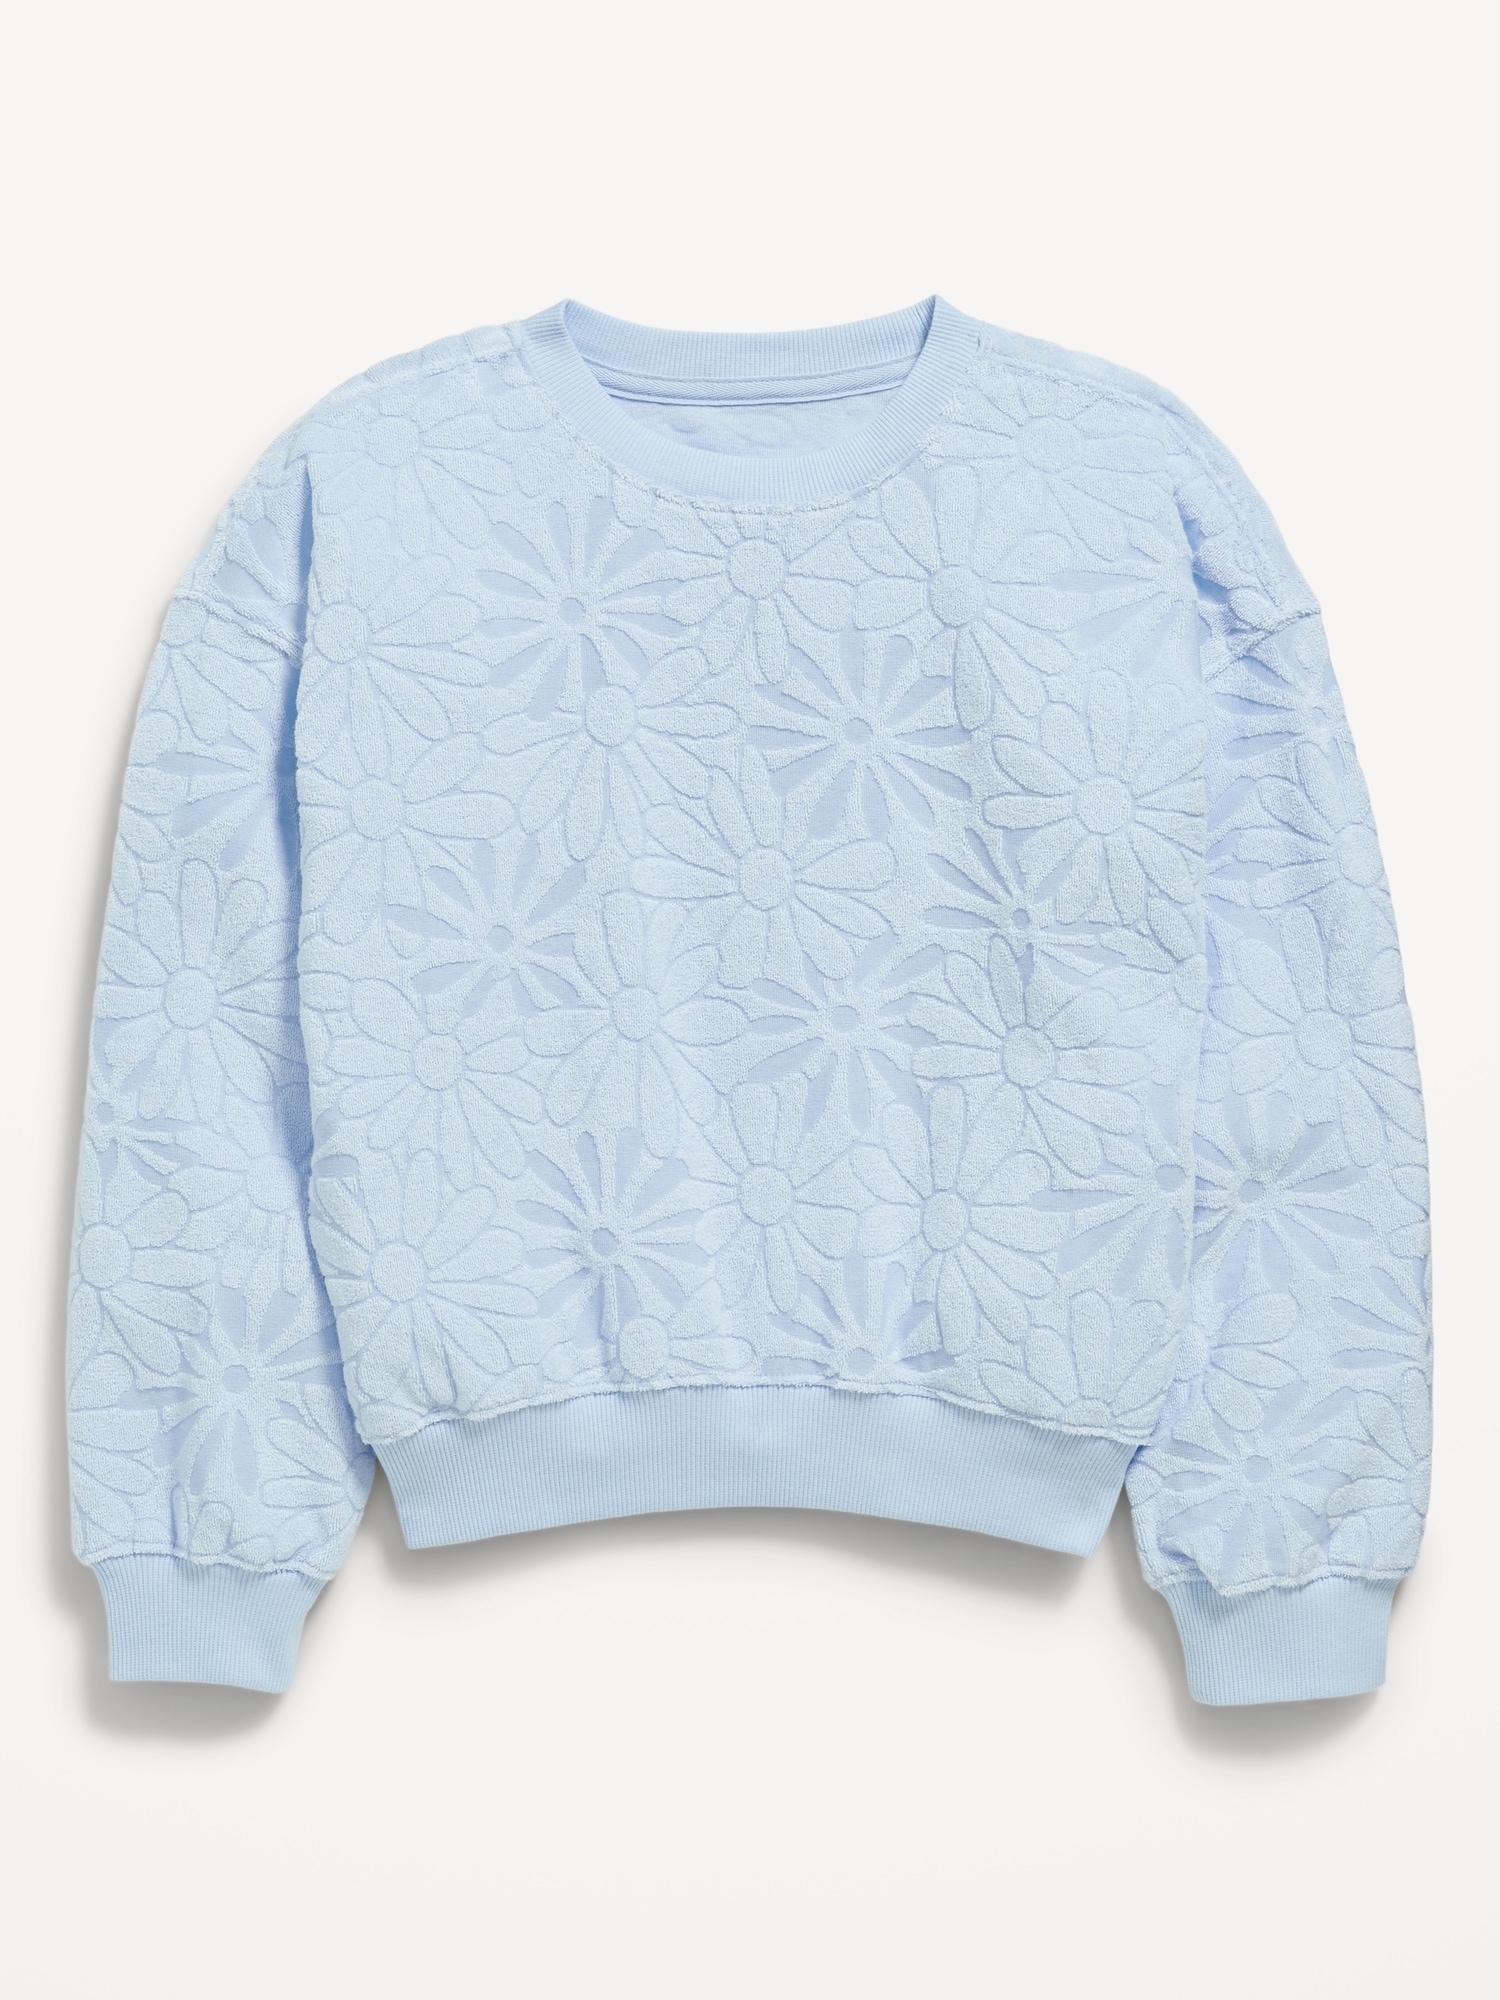 Oversized Textured-Floral Drop-Shoulder Sweatshirt for Girls